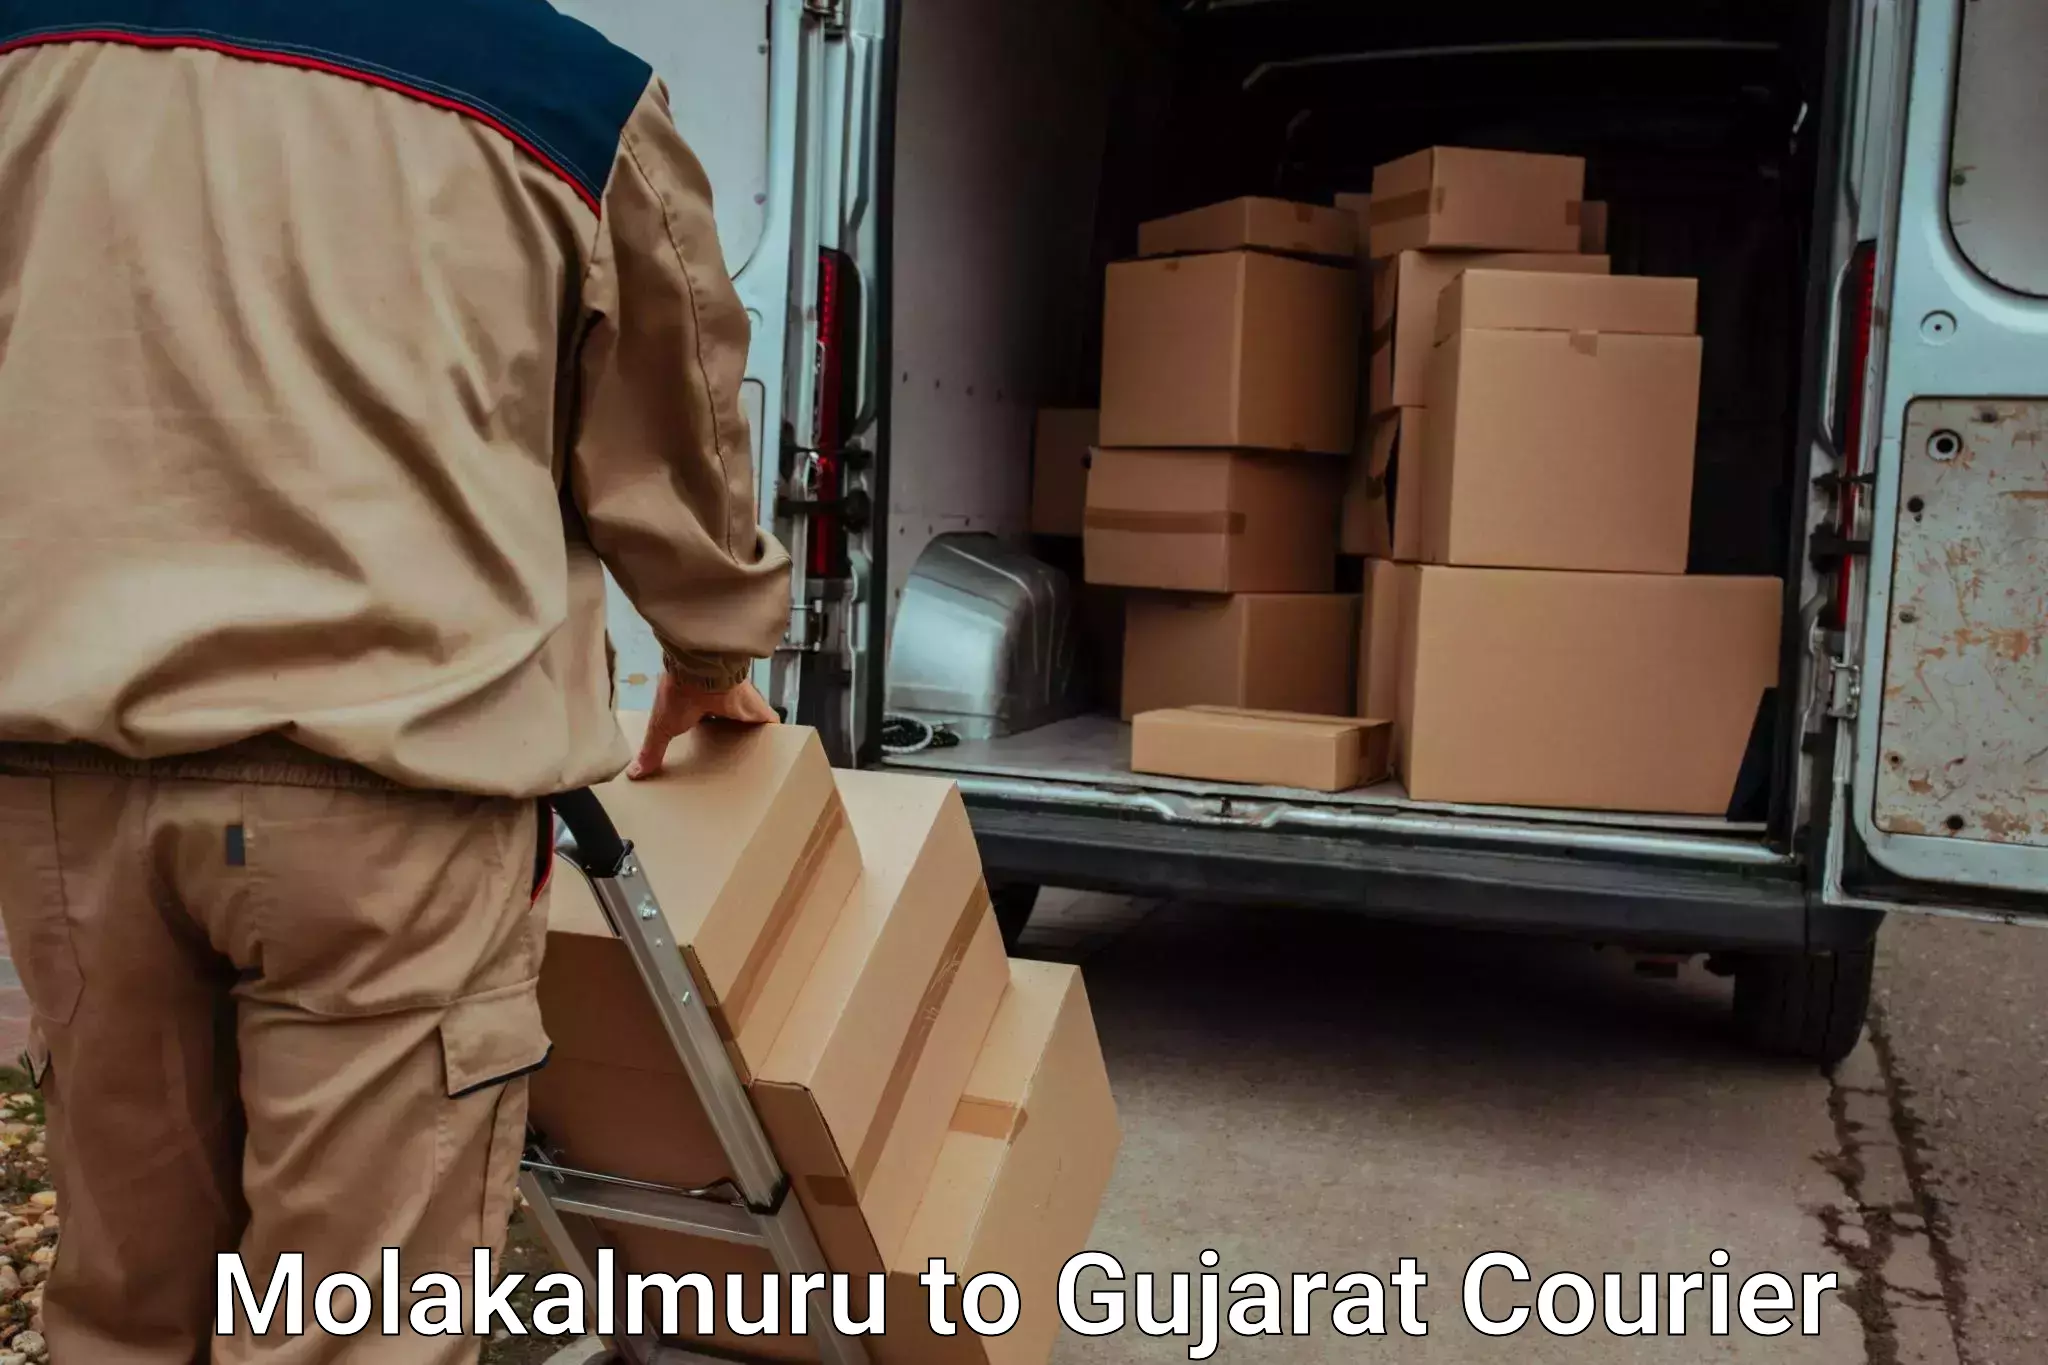 Same day luggage service Molakalmuru to Gujarat